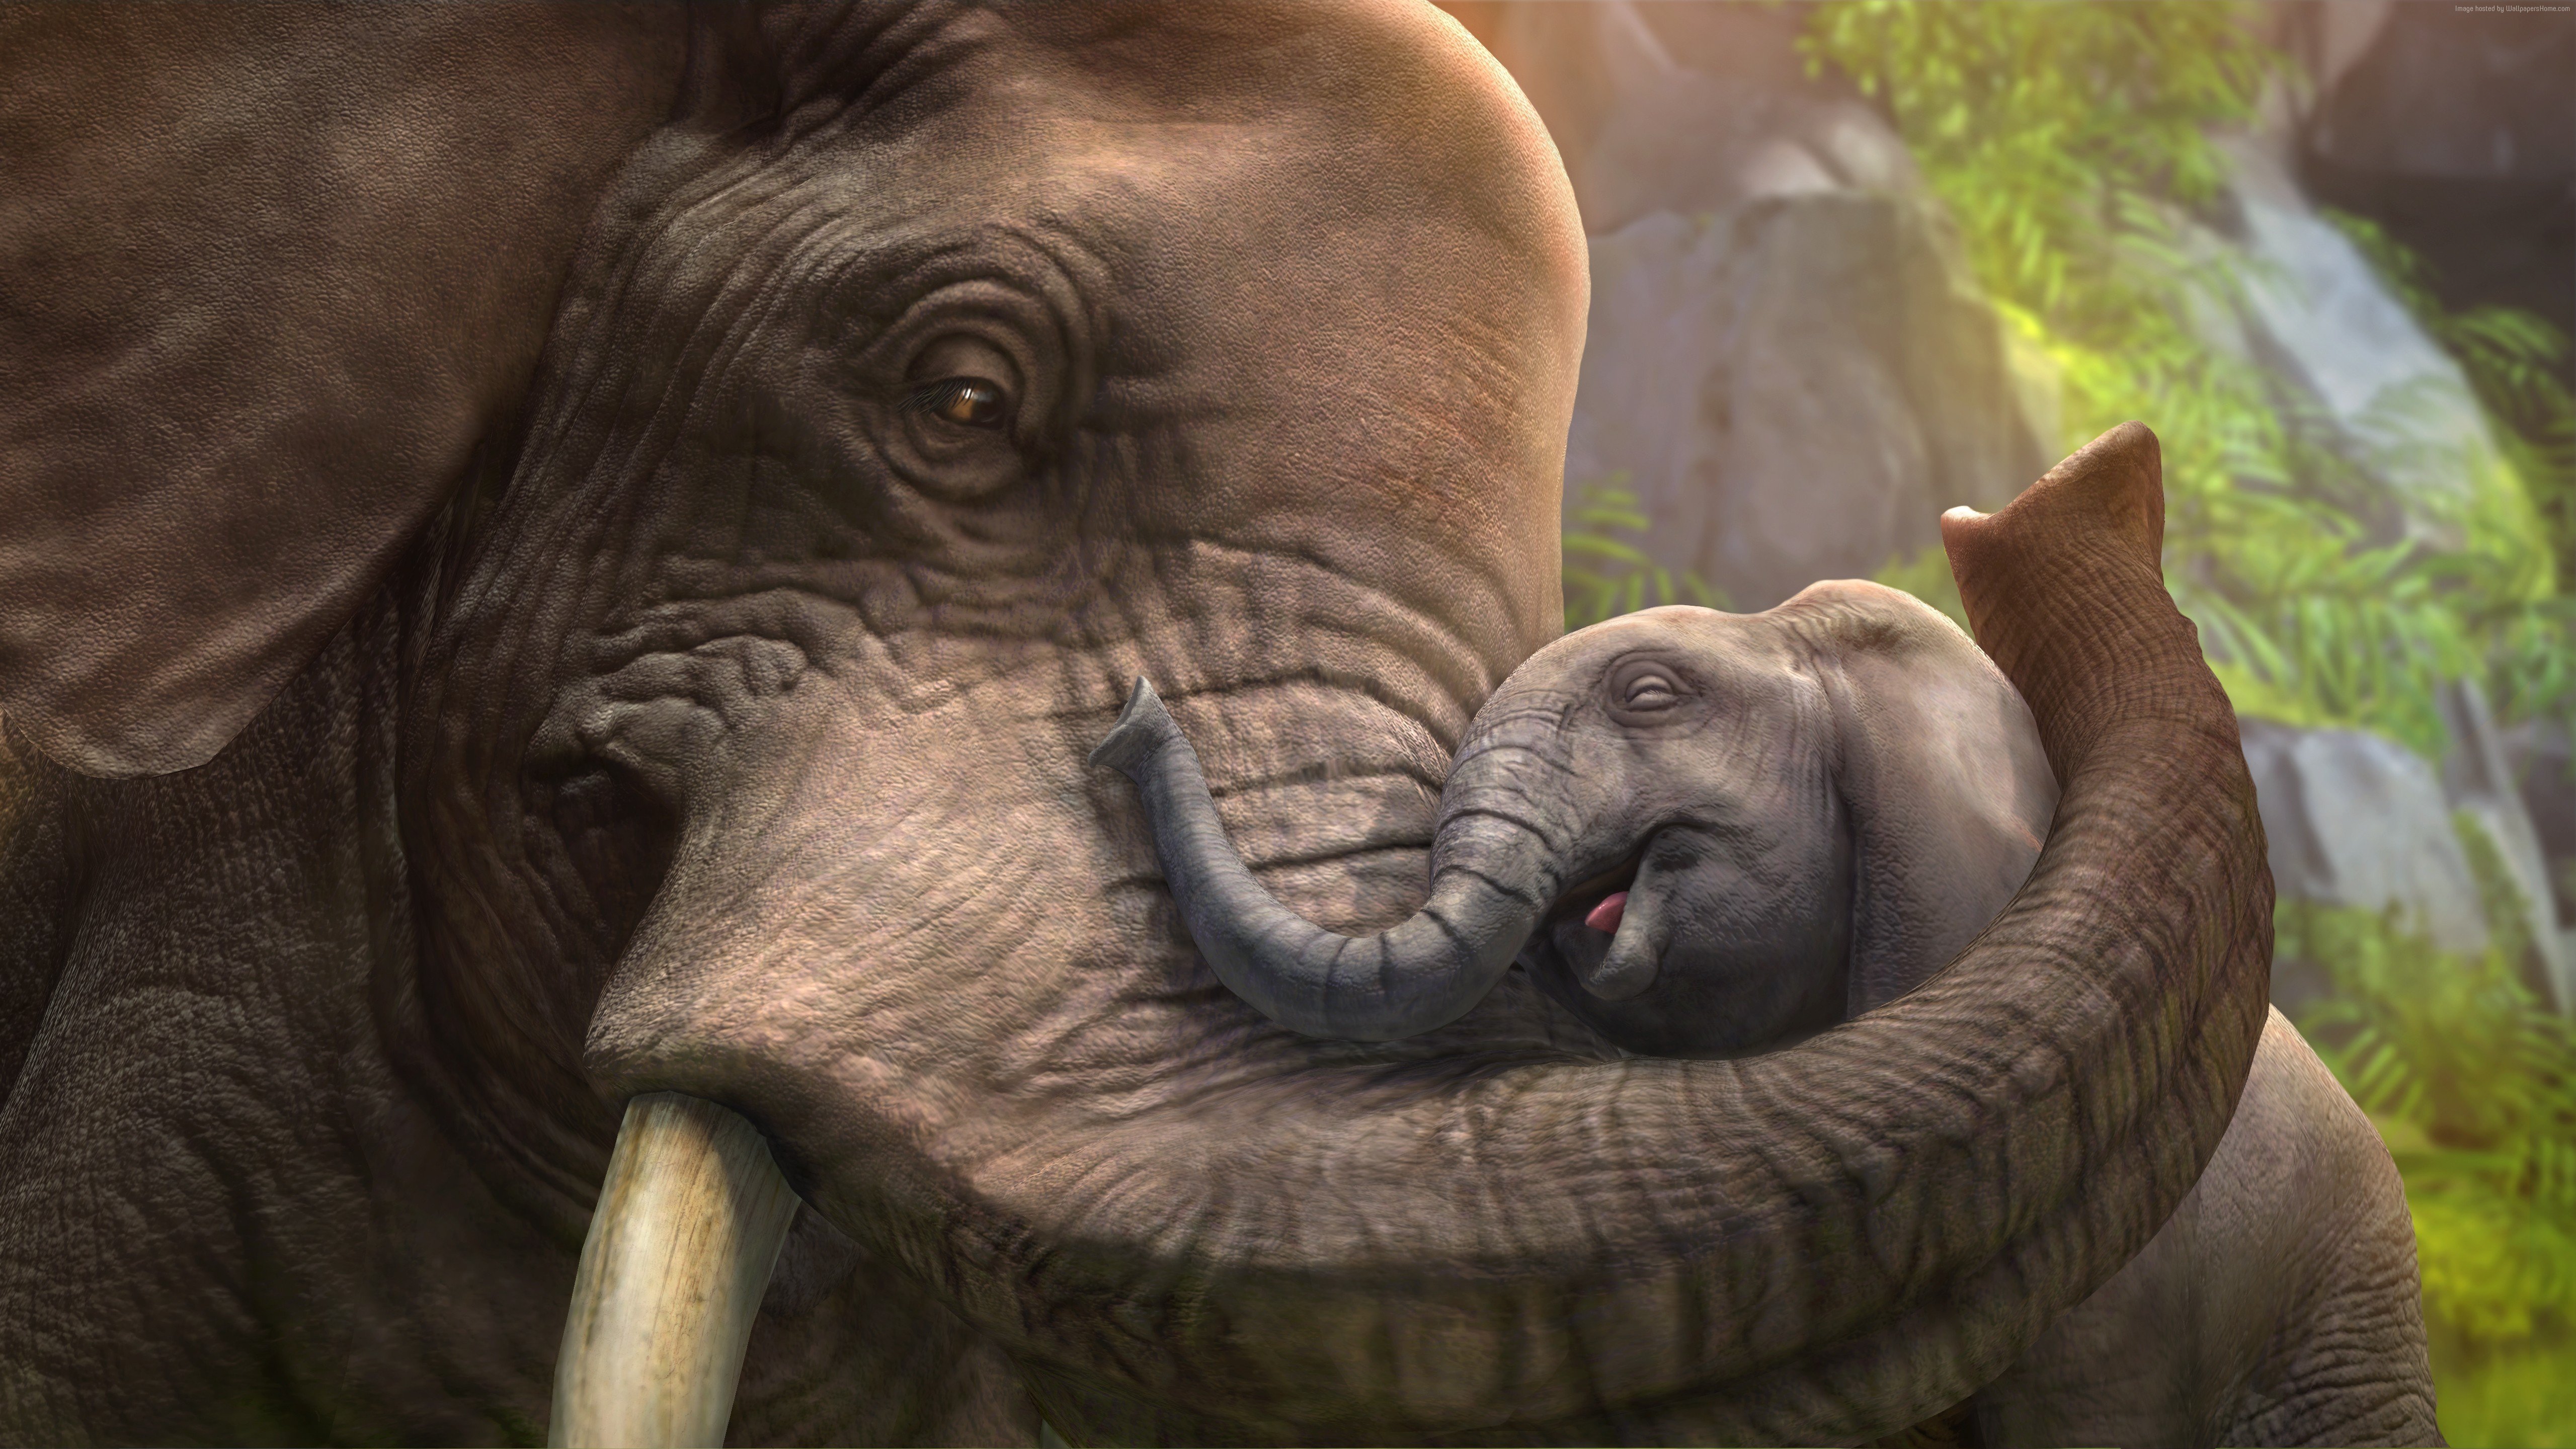 The Elephant Love Animal 4K wallpaper